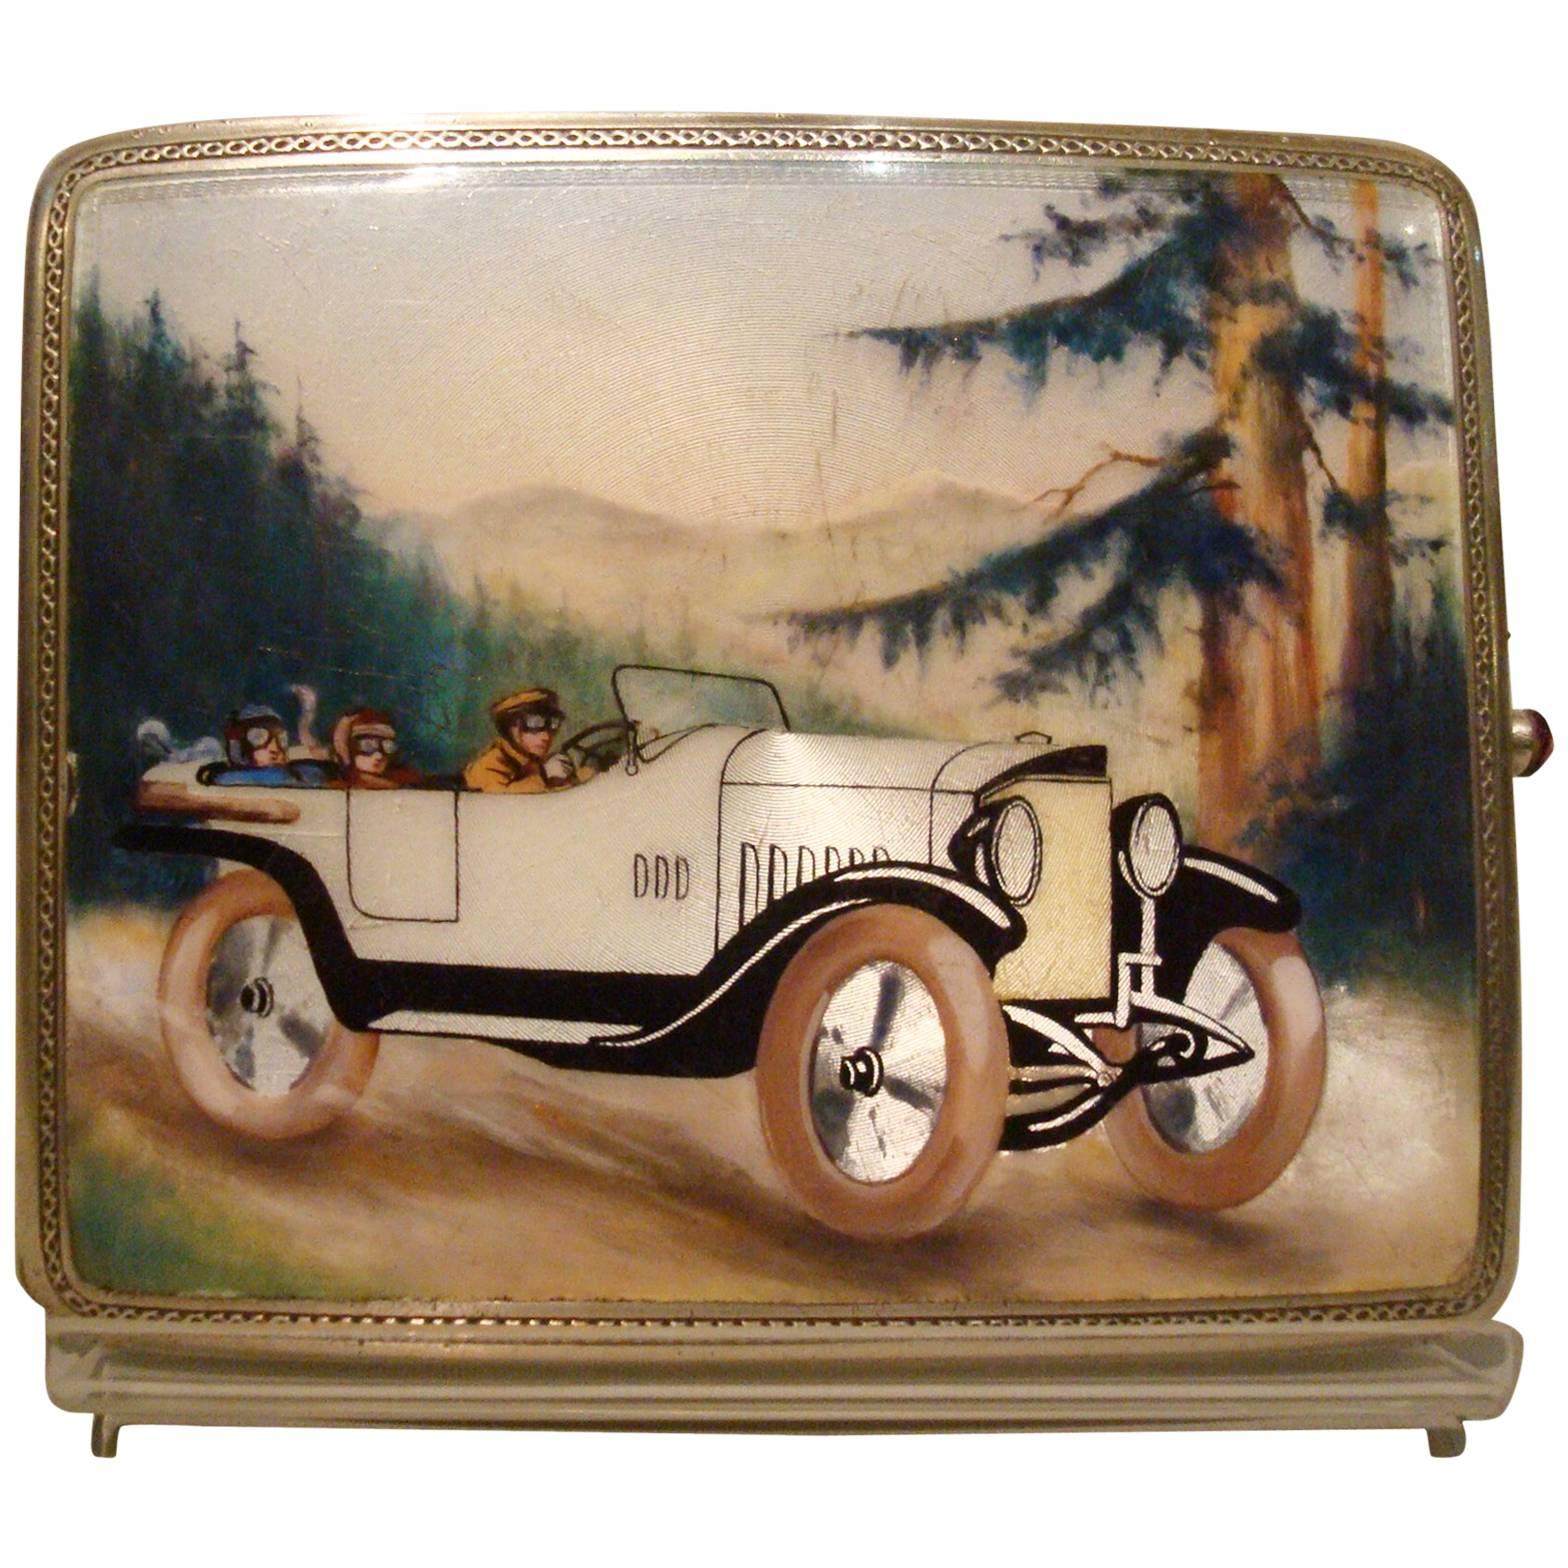 Sterling Silver and Enamel Cigarette Case, Box Mercedes Car, Automobilia, 1920s